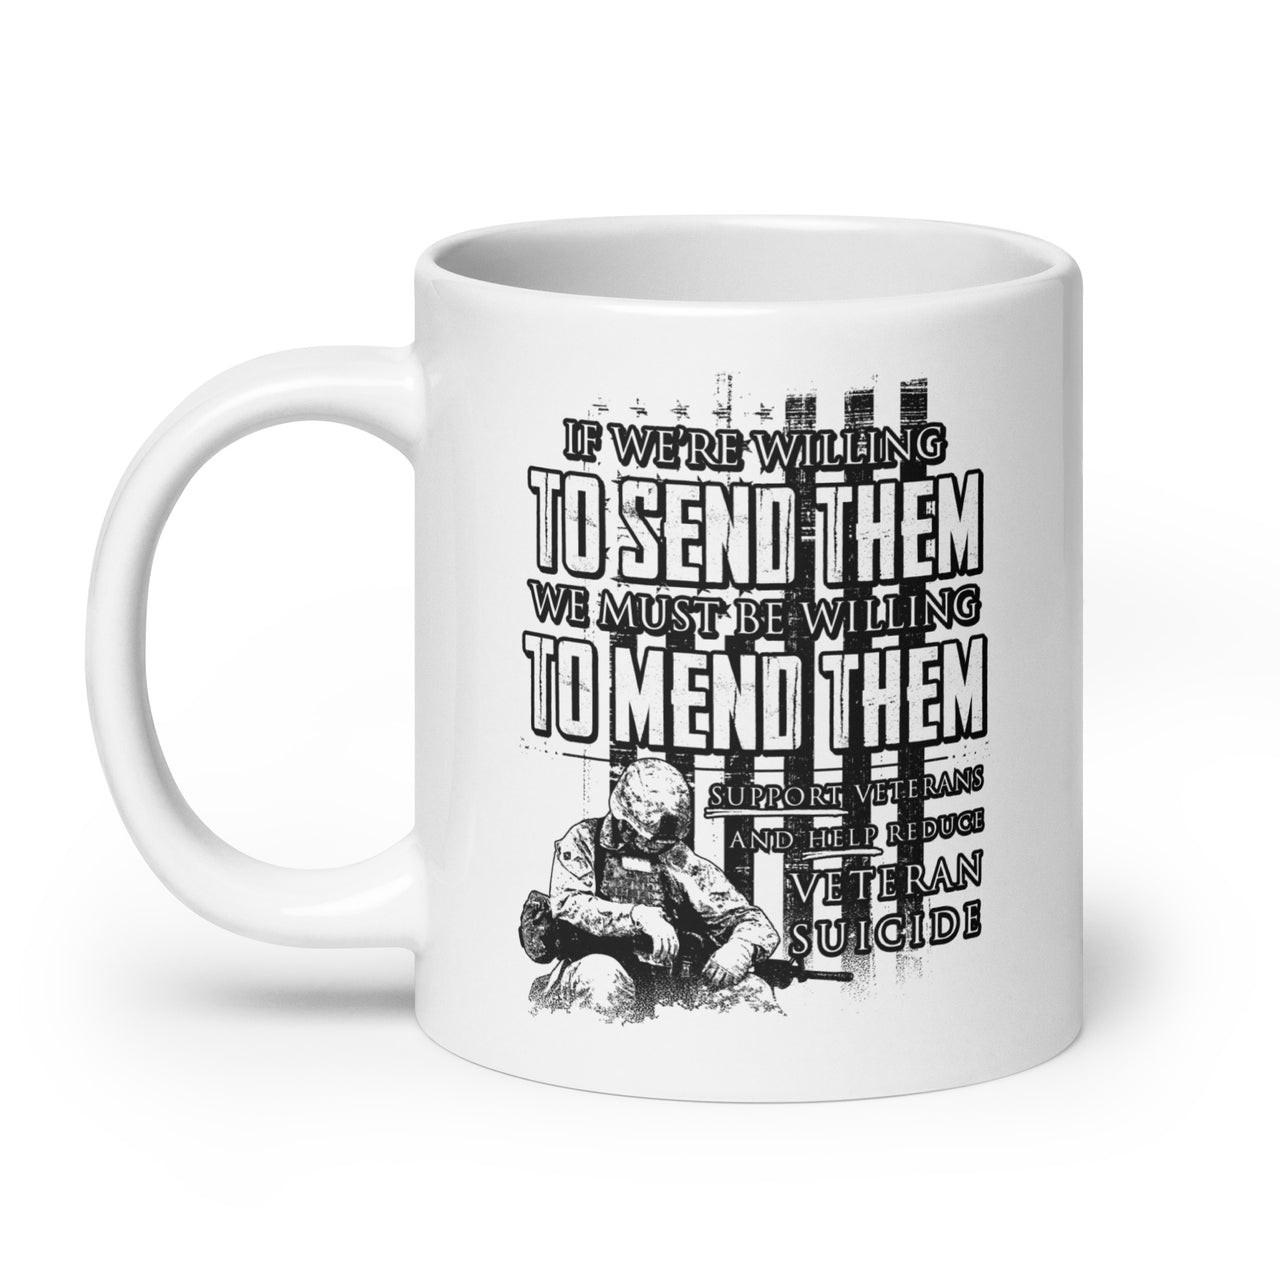 We Must Mend Them - Coffee Mug